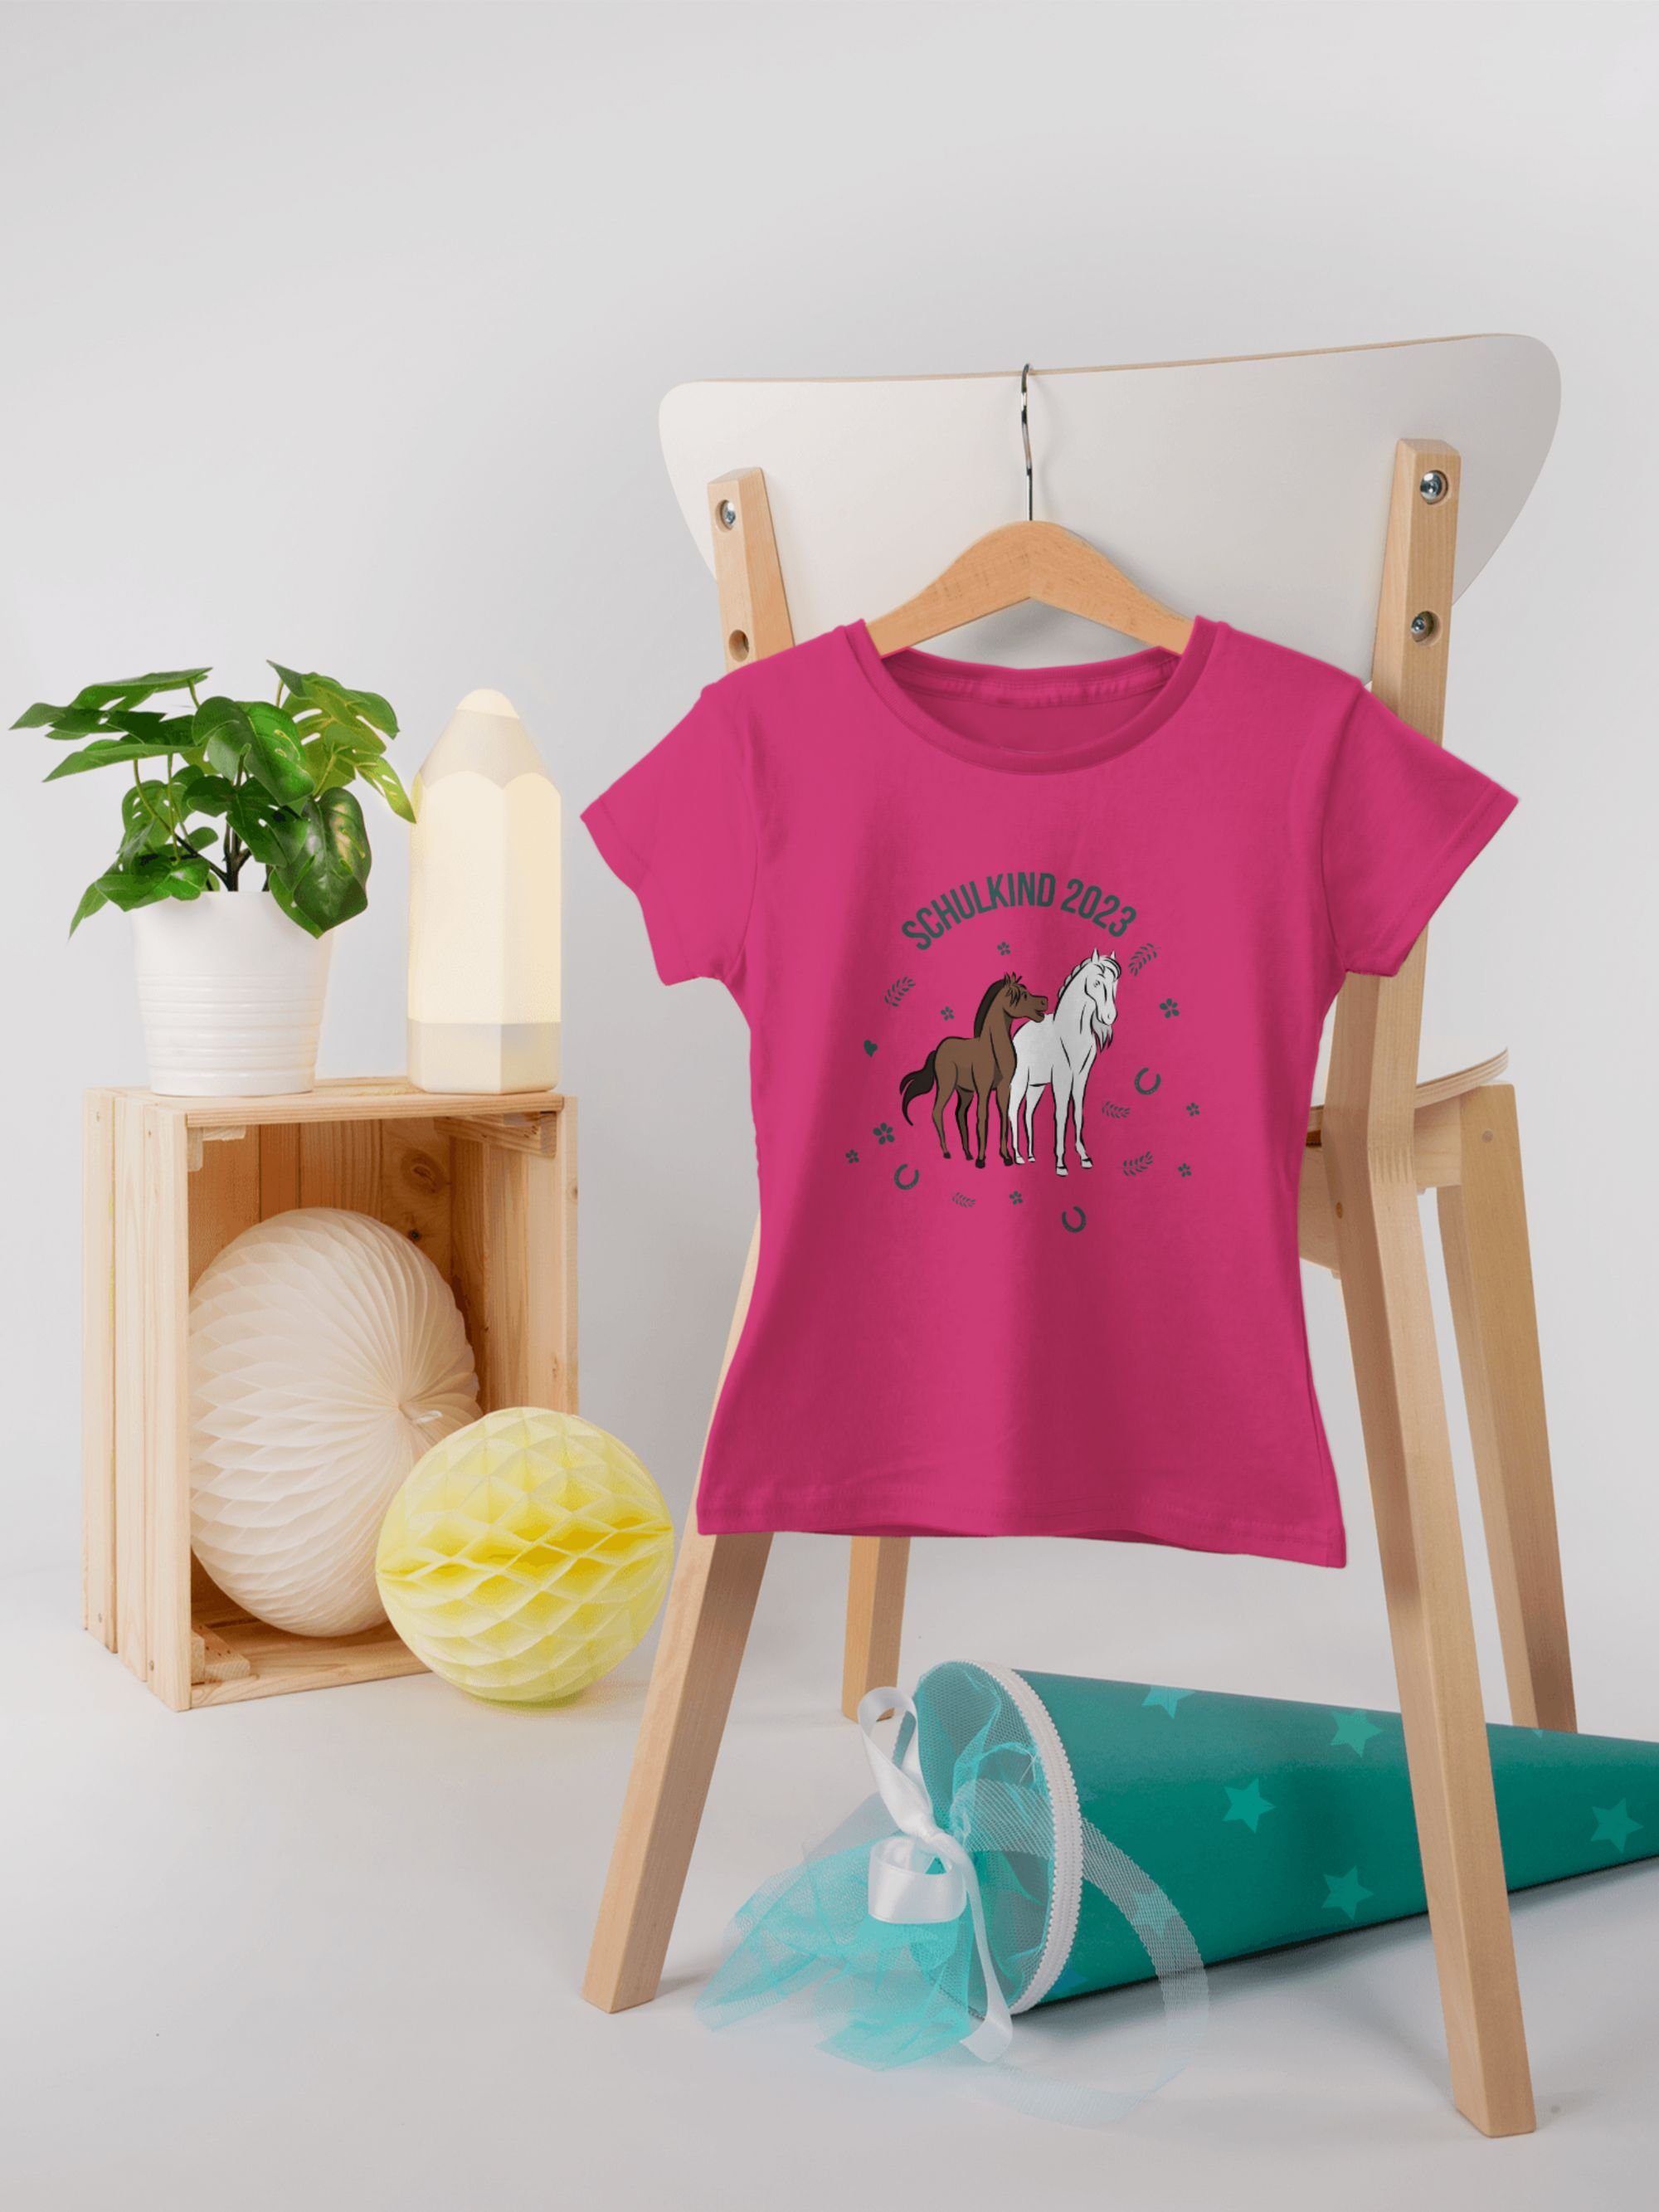 Shirtracer Pferde 2023 Einschulung Schulkind T-Shirt 1 Mädchen Fuchsia